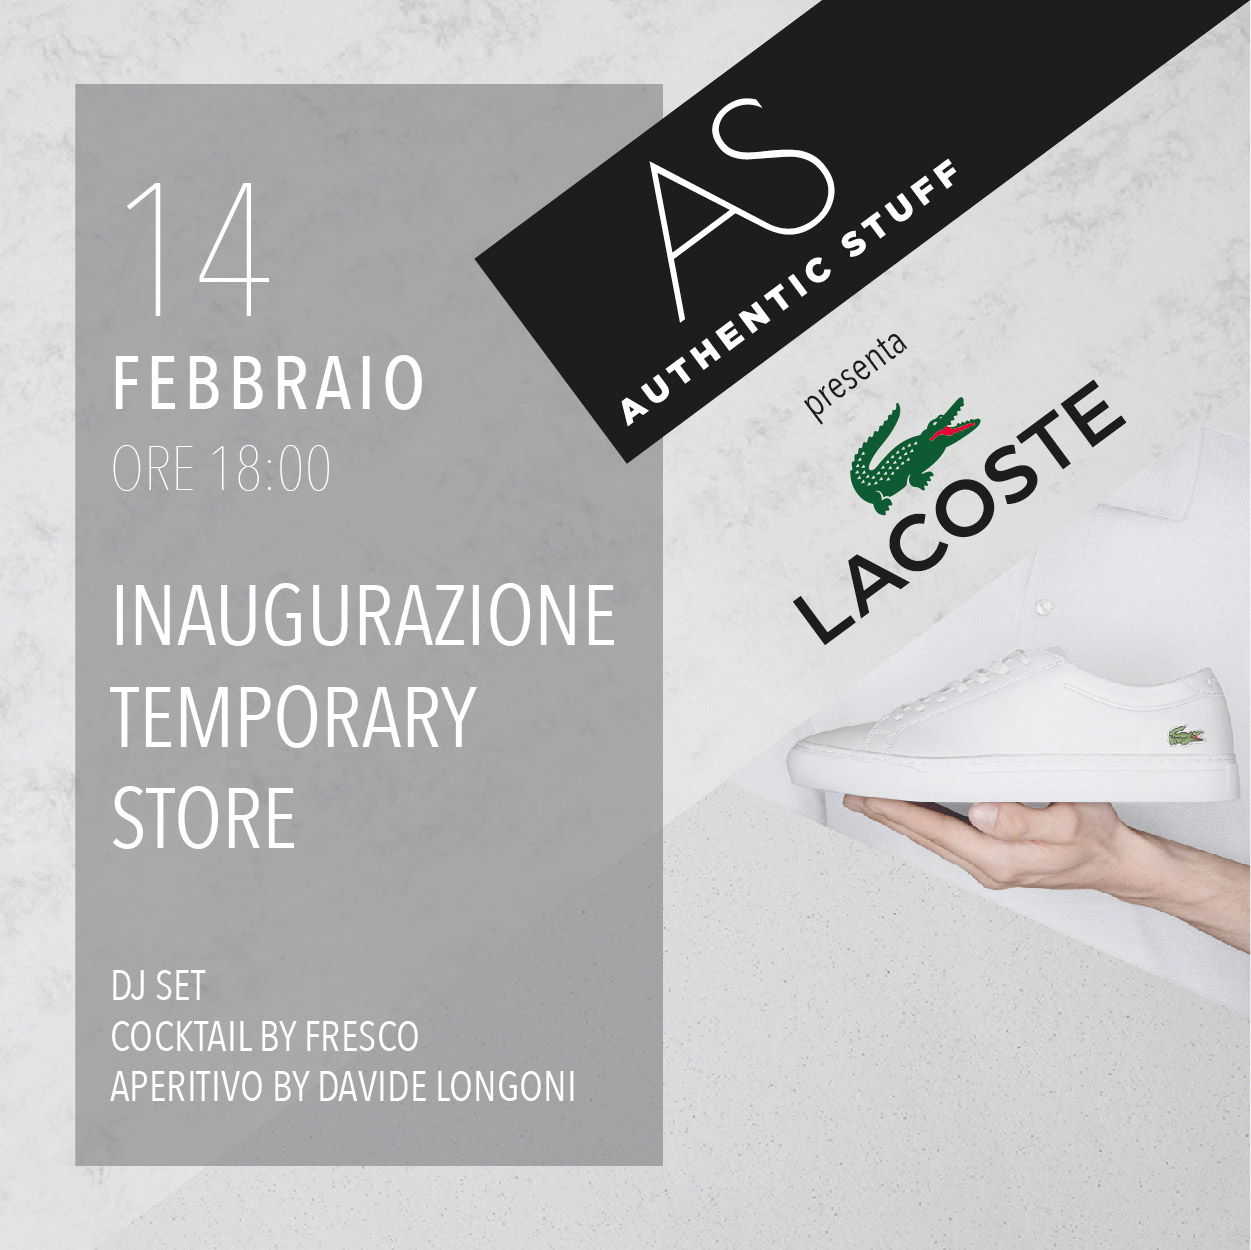 Lacoste opening Milano evento